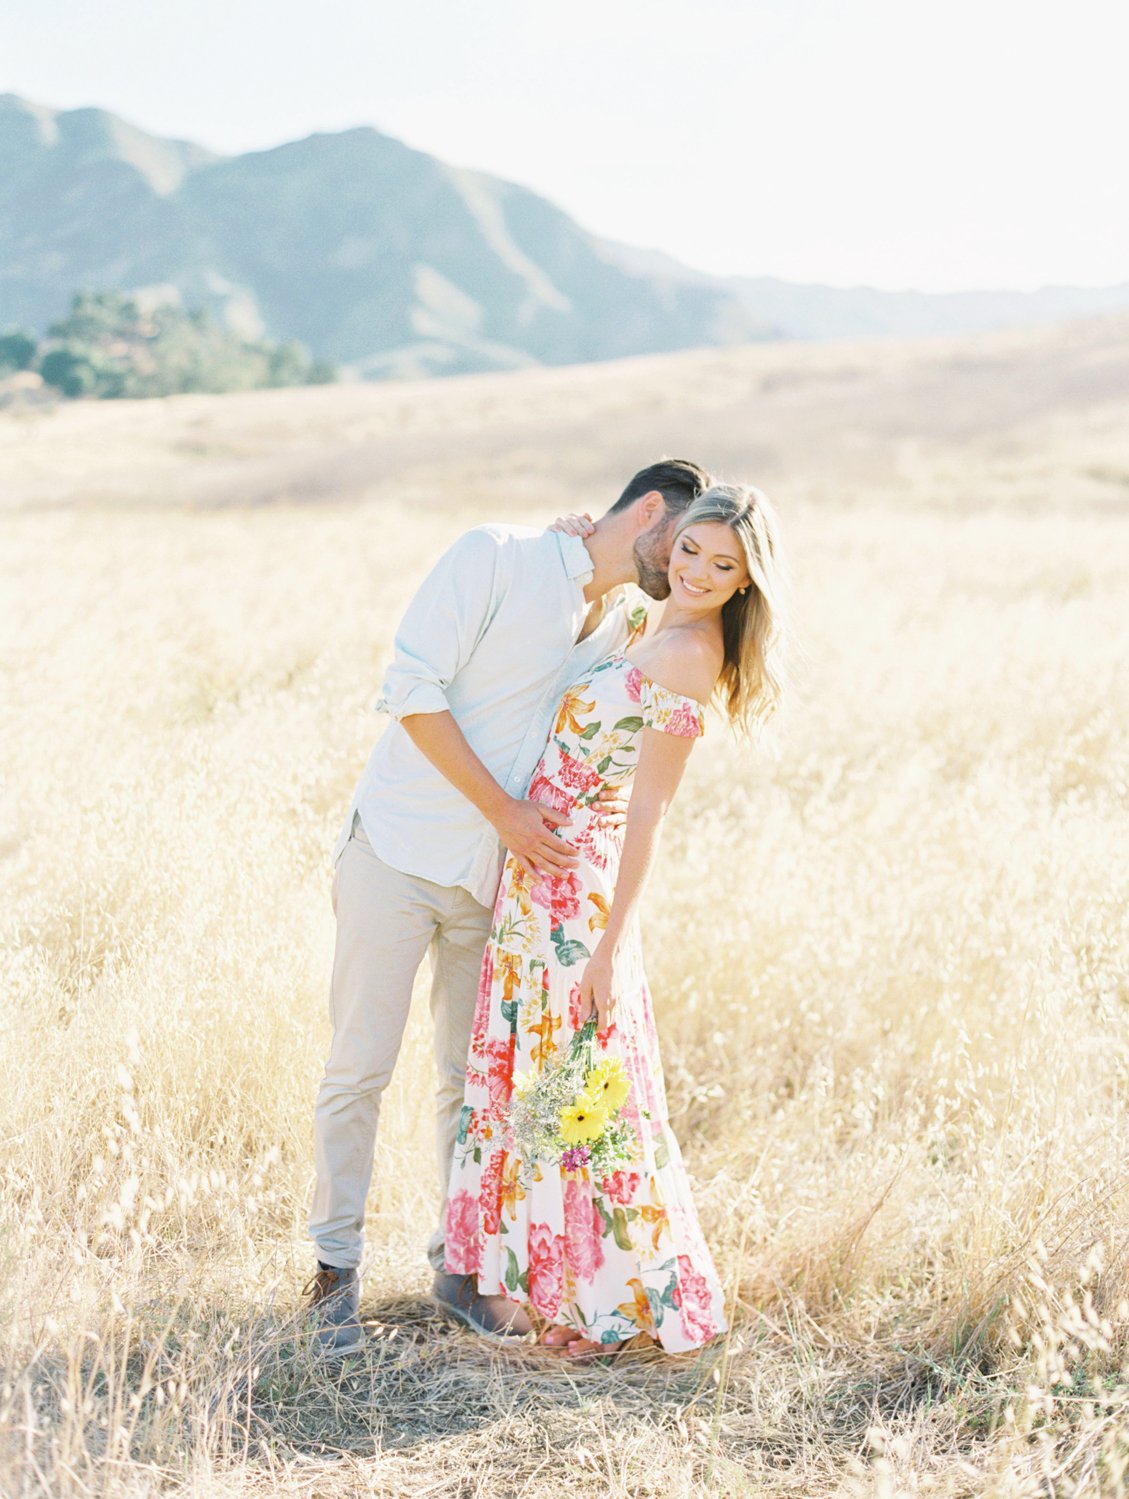 wisteria-photography.com | Wisteria Photography | Malibu Canyon | Weddings Engagement | Southern California Photographer-5.jpg